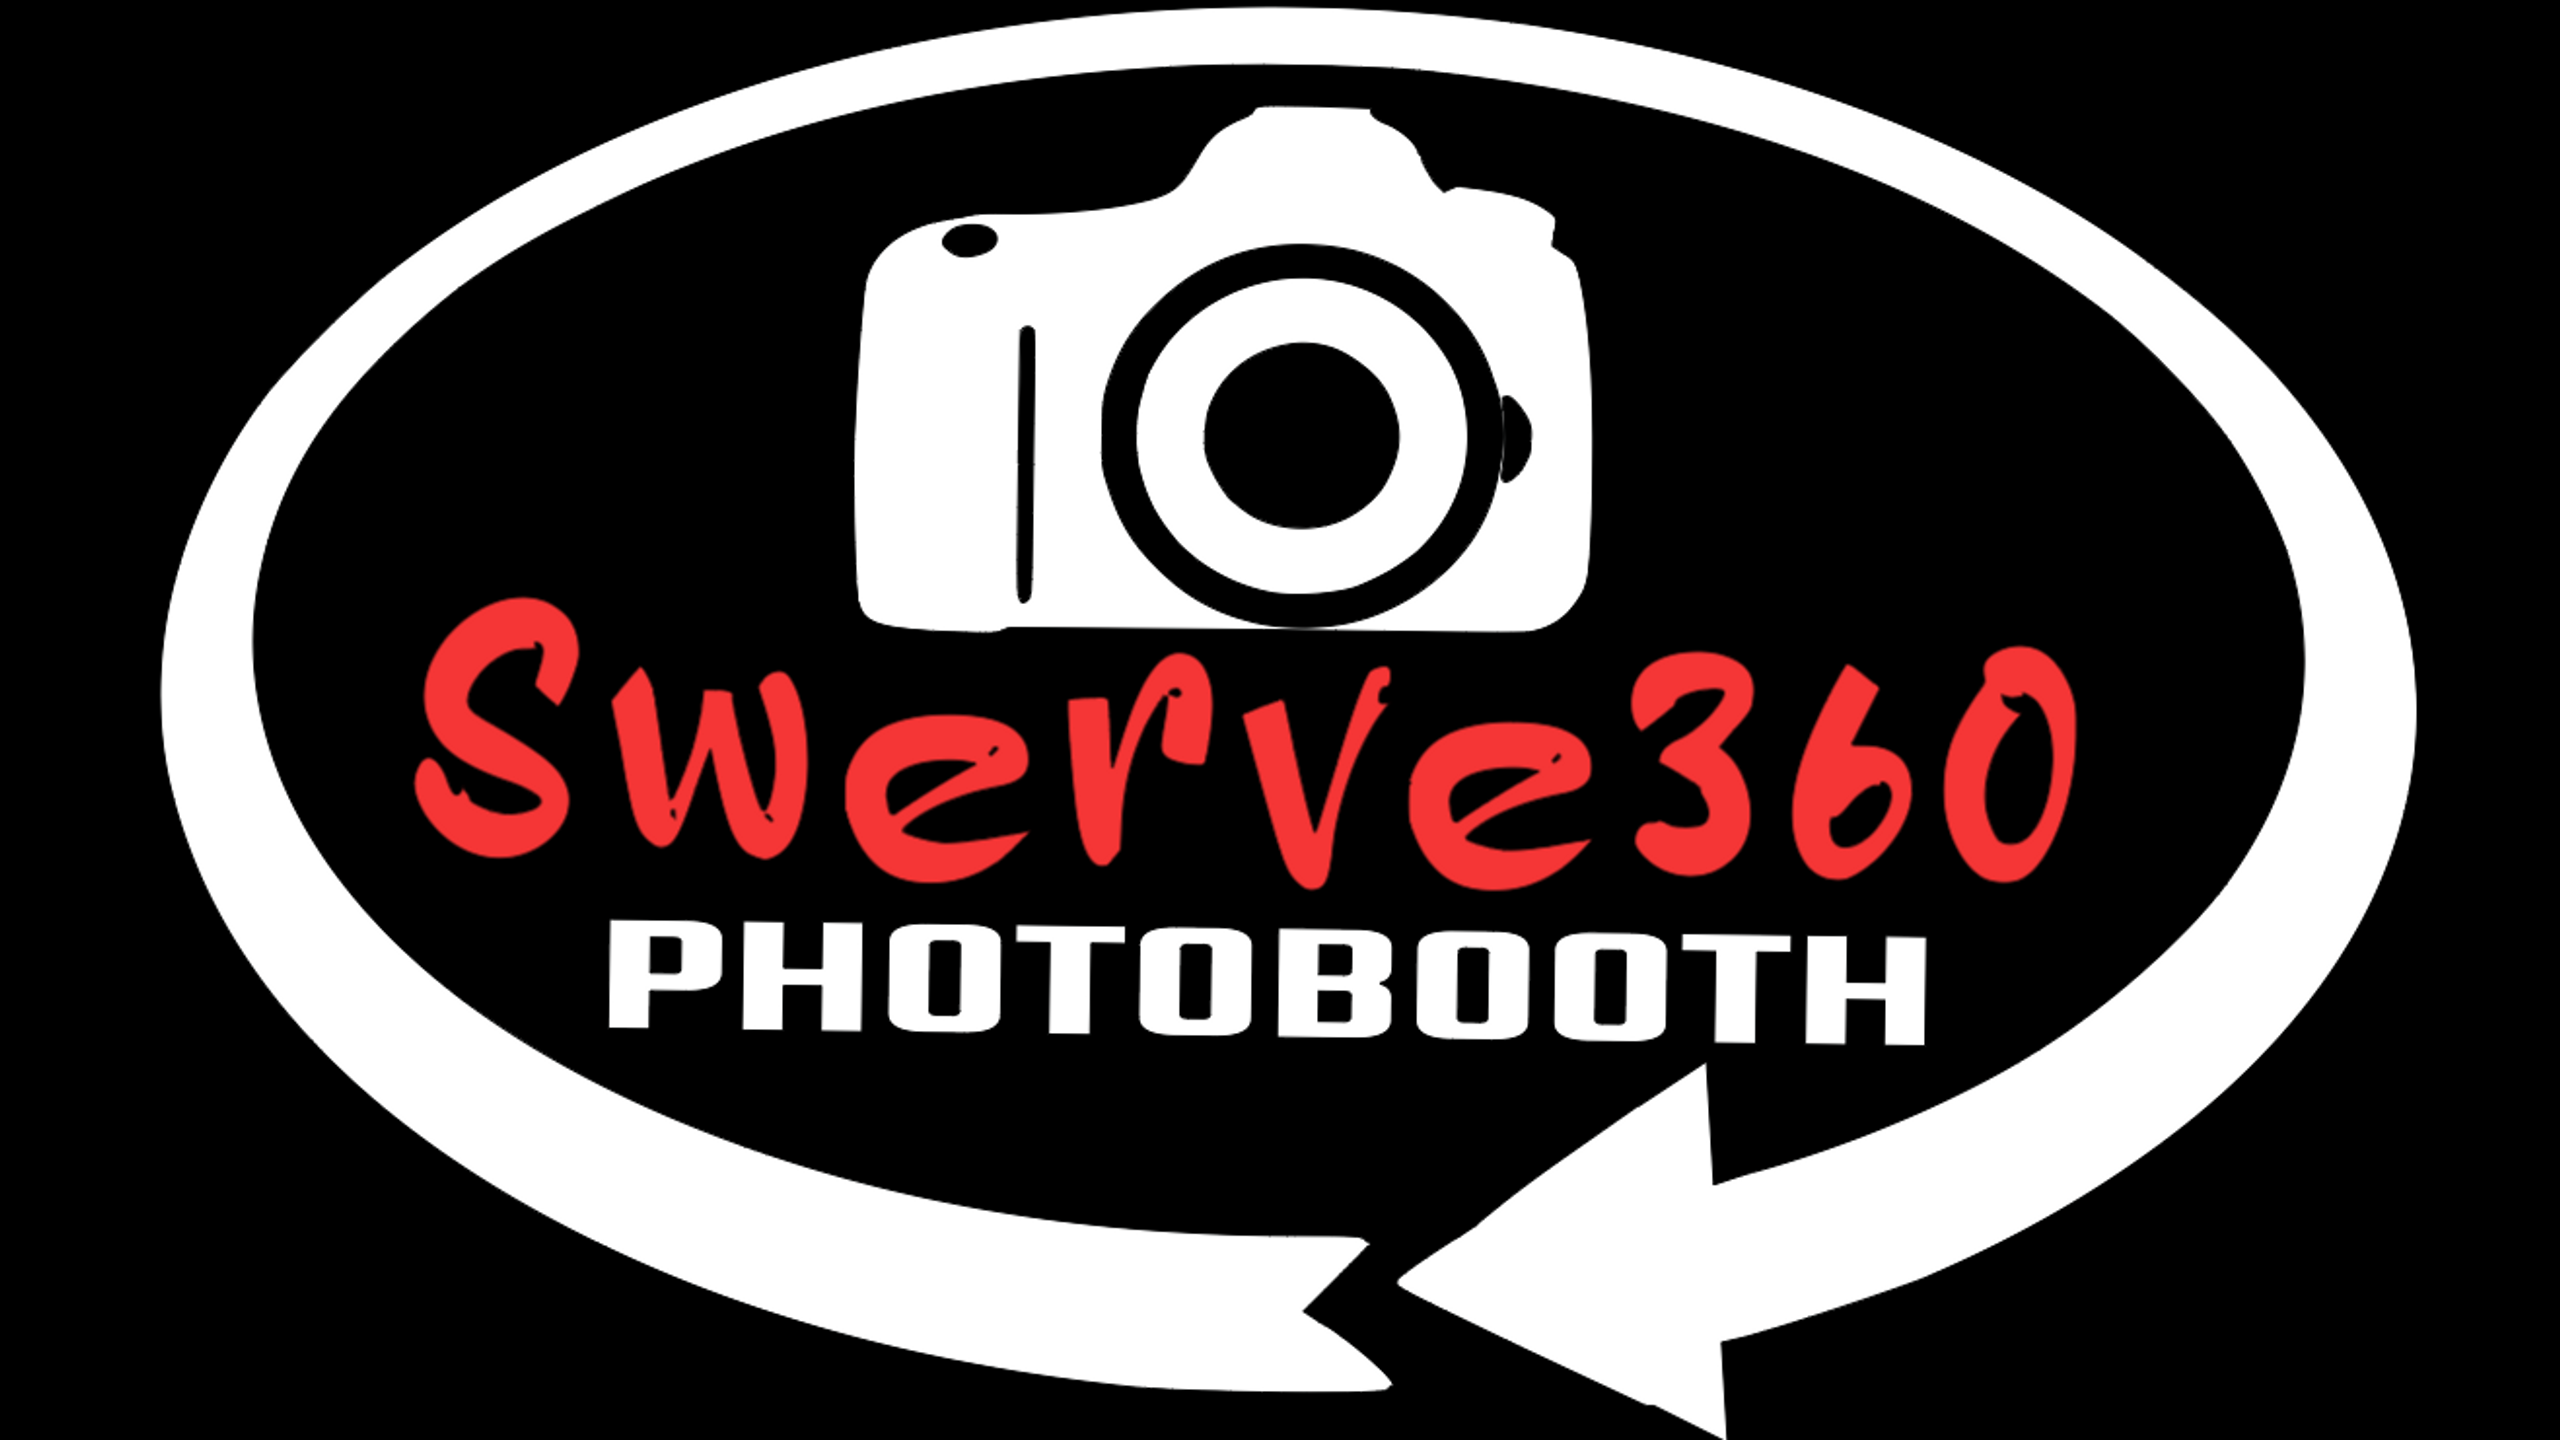 SWERVE 360 PHOTOBOOTH